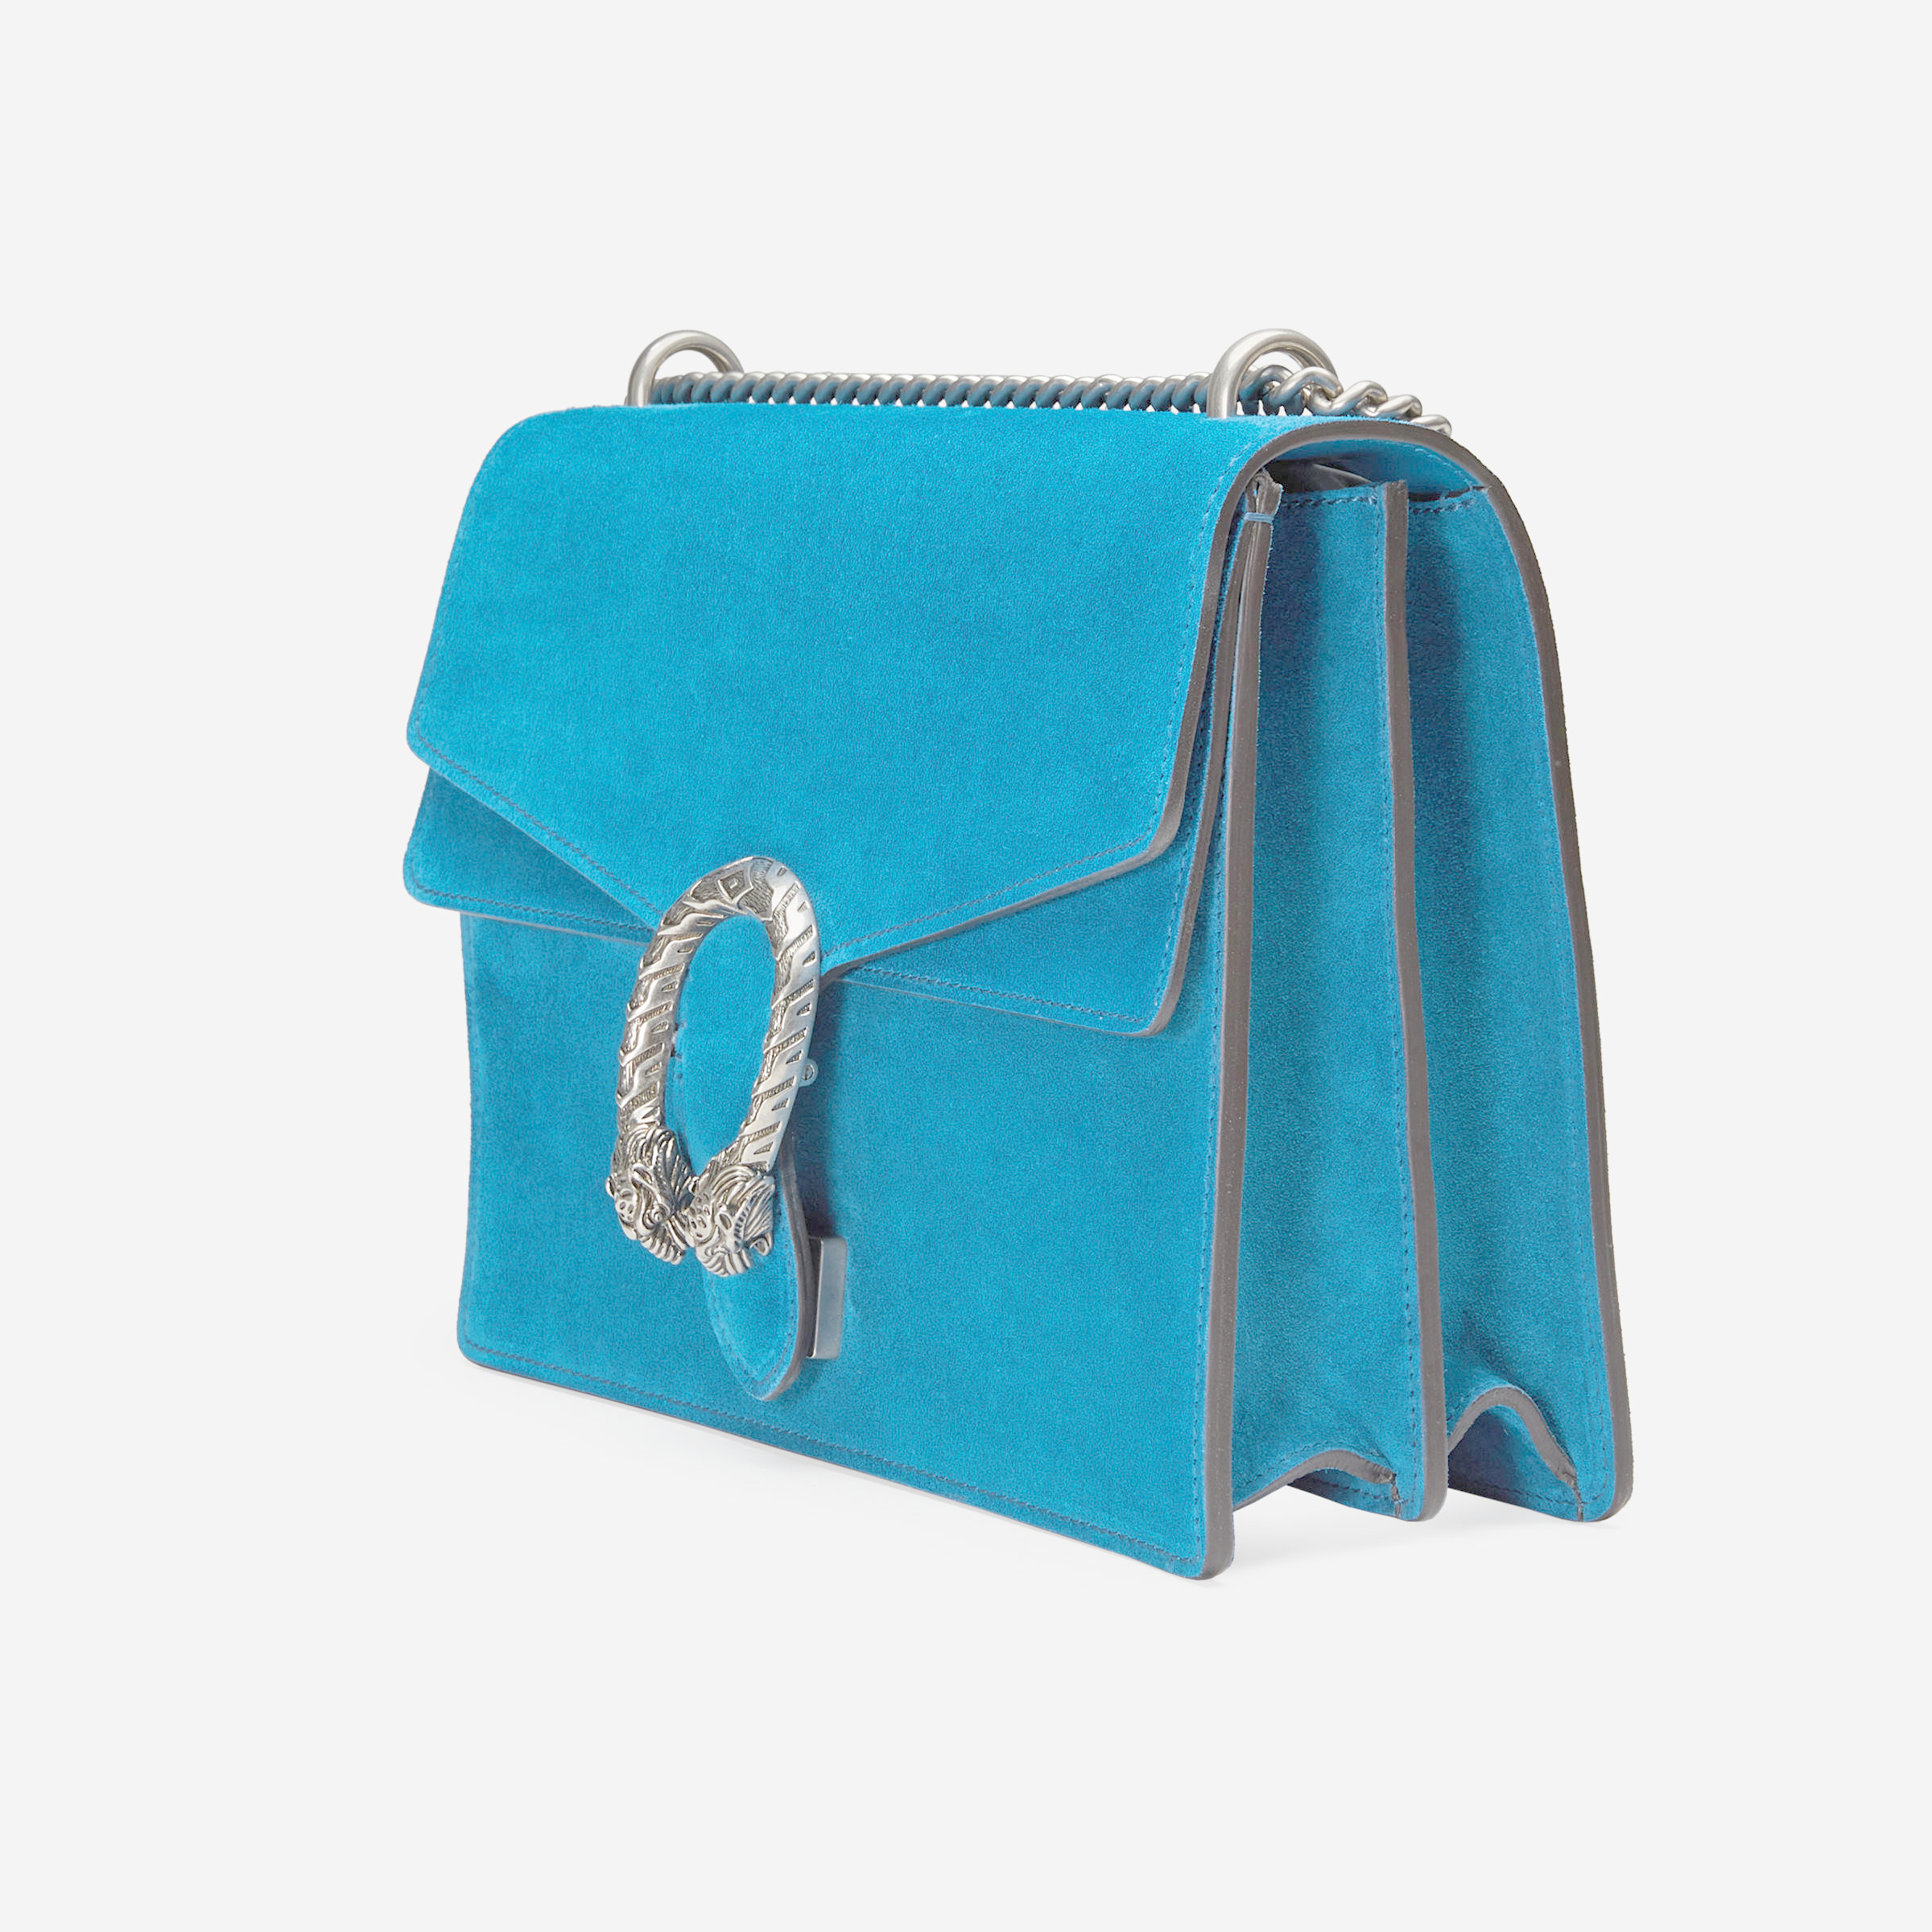 Gucci Dionysus Suede Shoulder Bag in Blue Suede (Blue) - Lyst